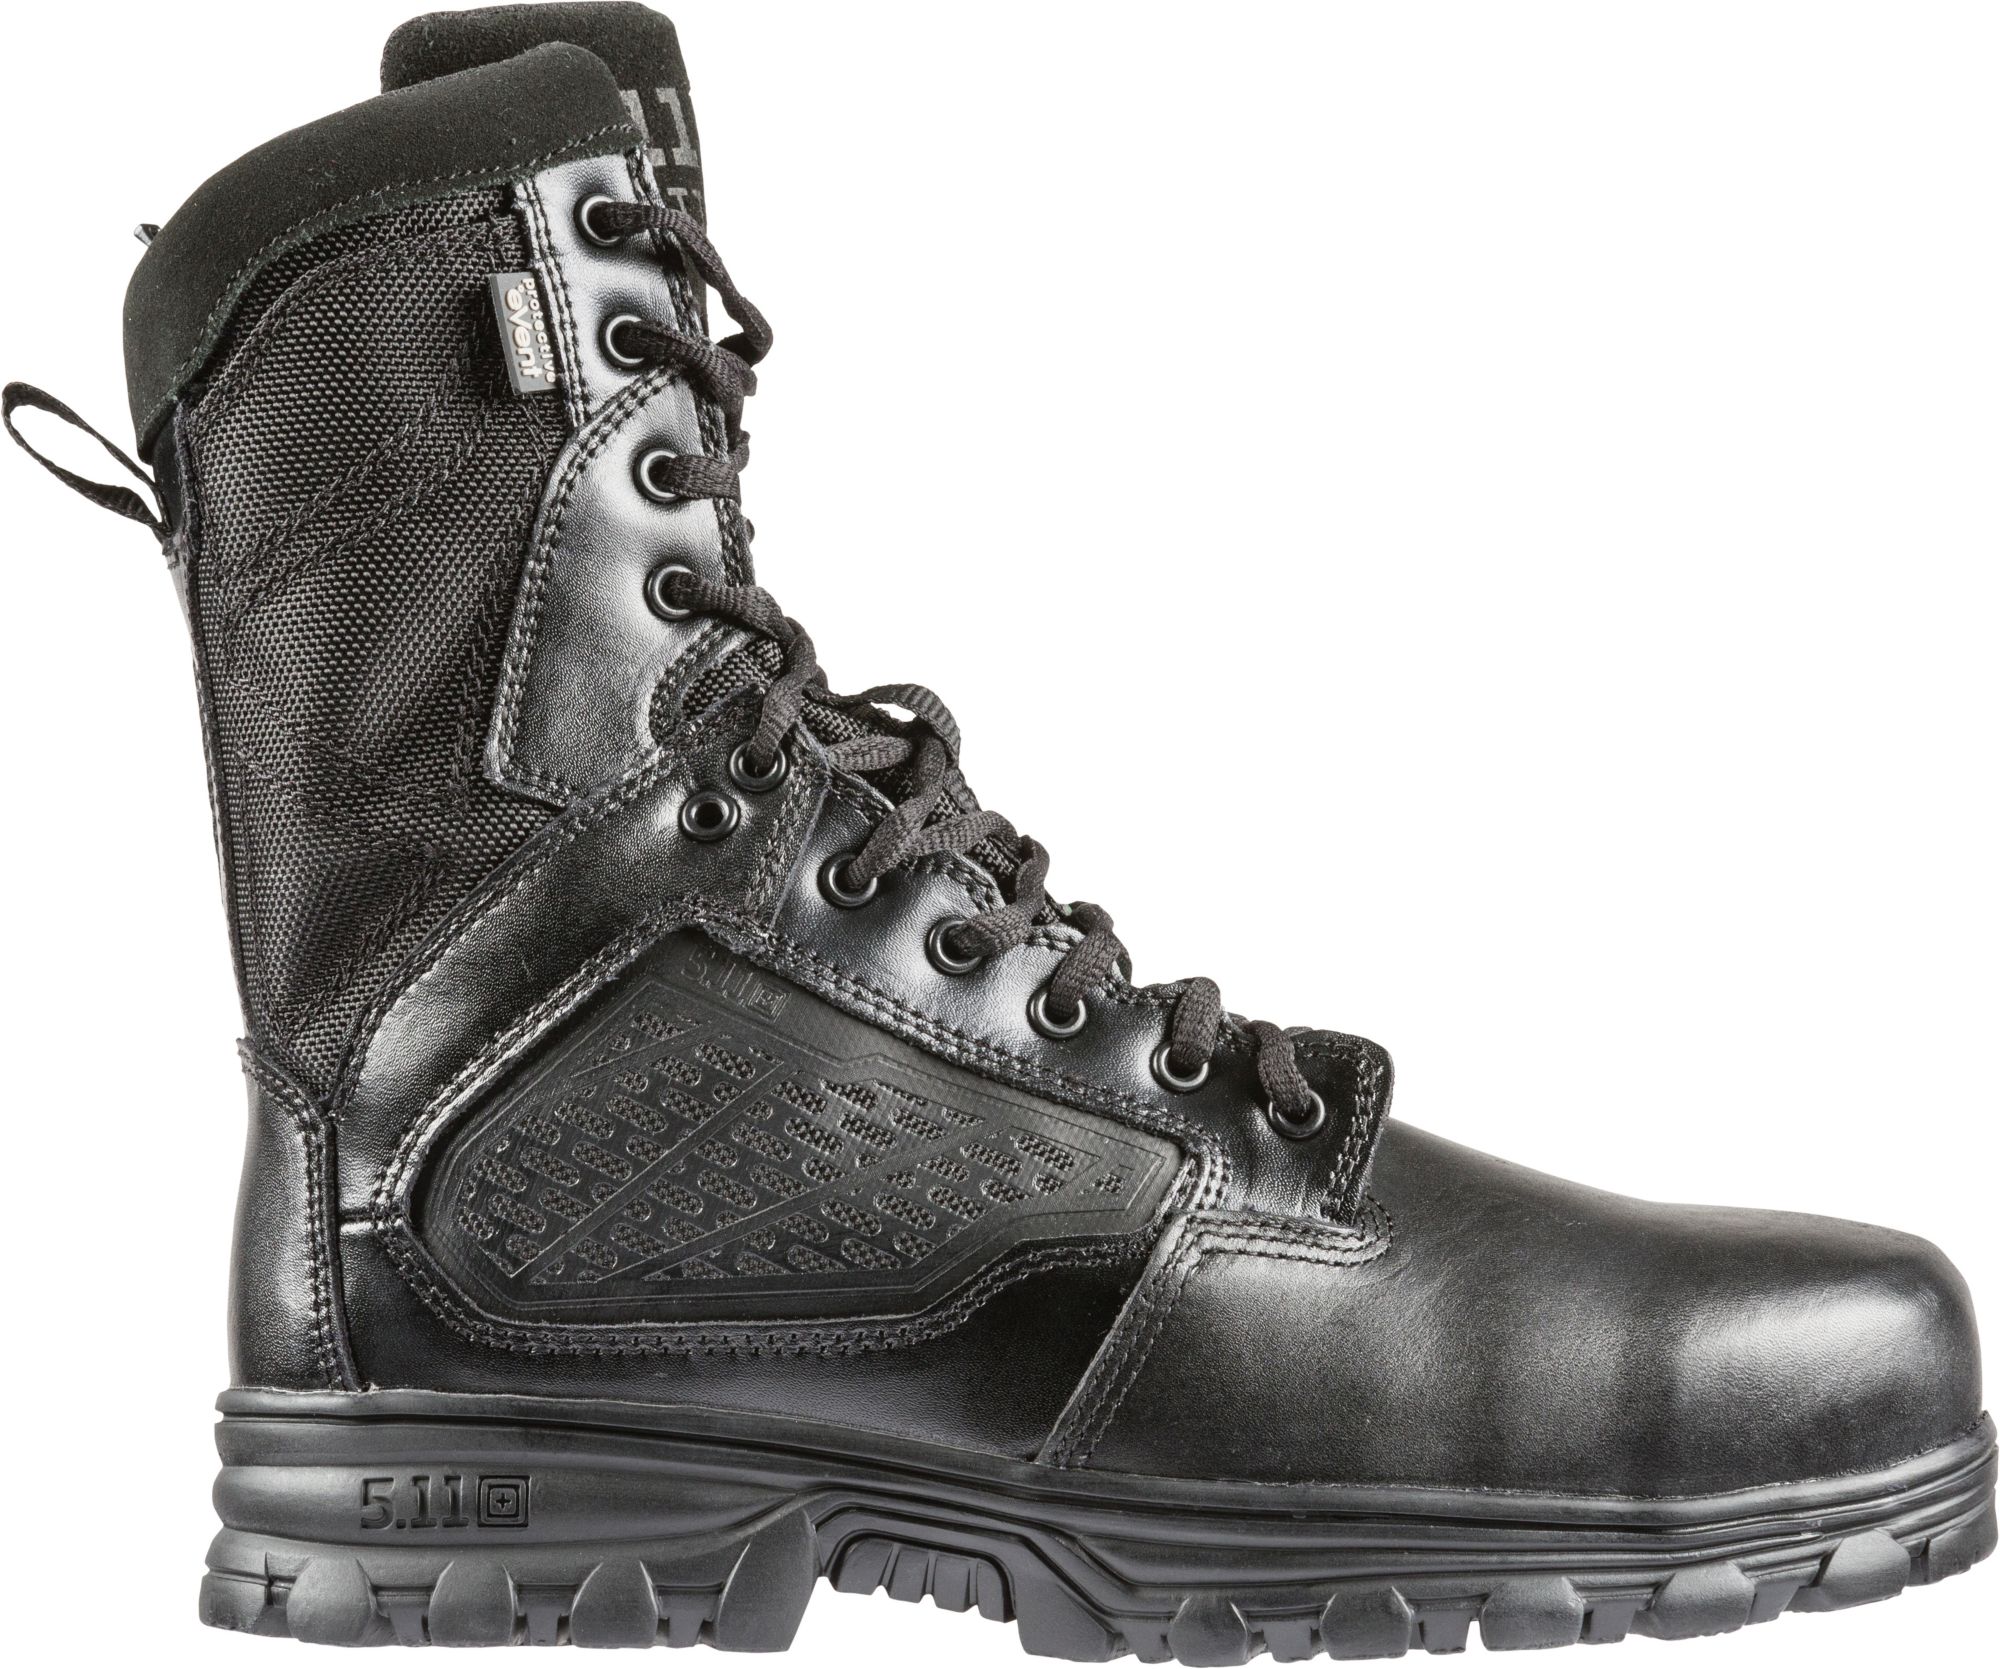 composite toe combat boots